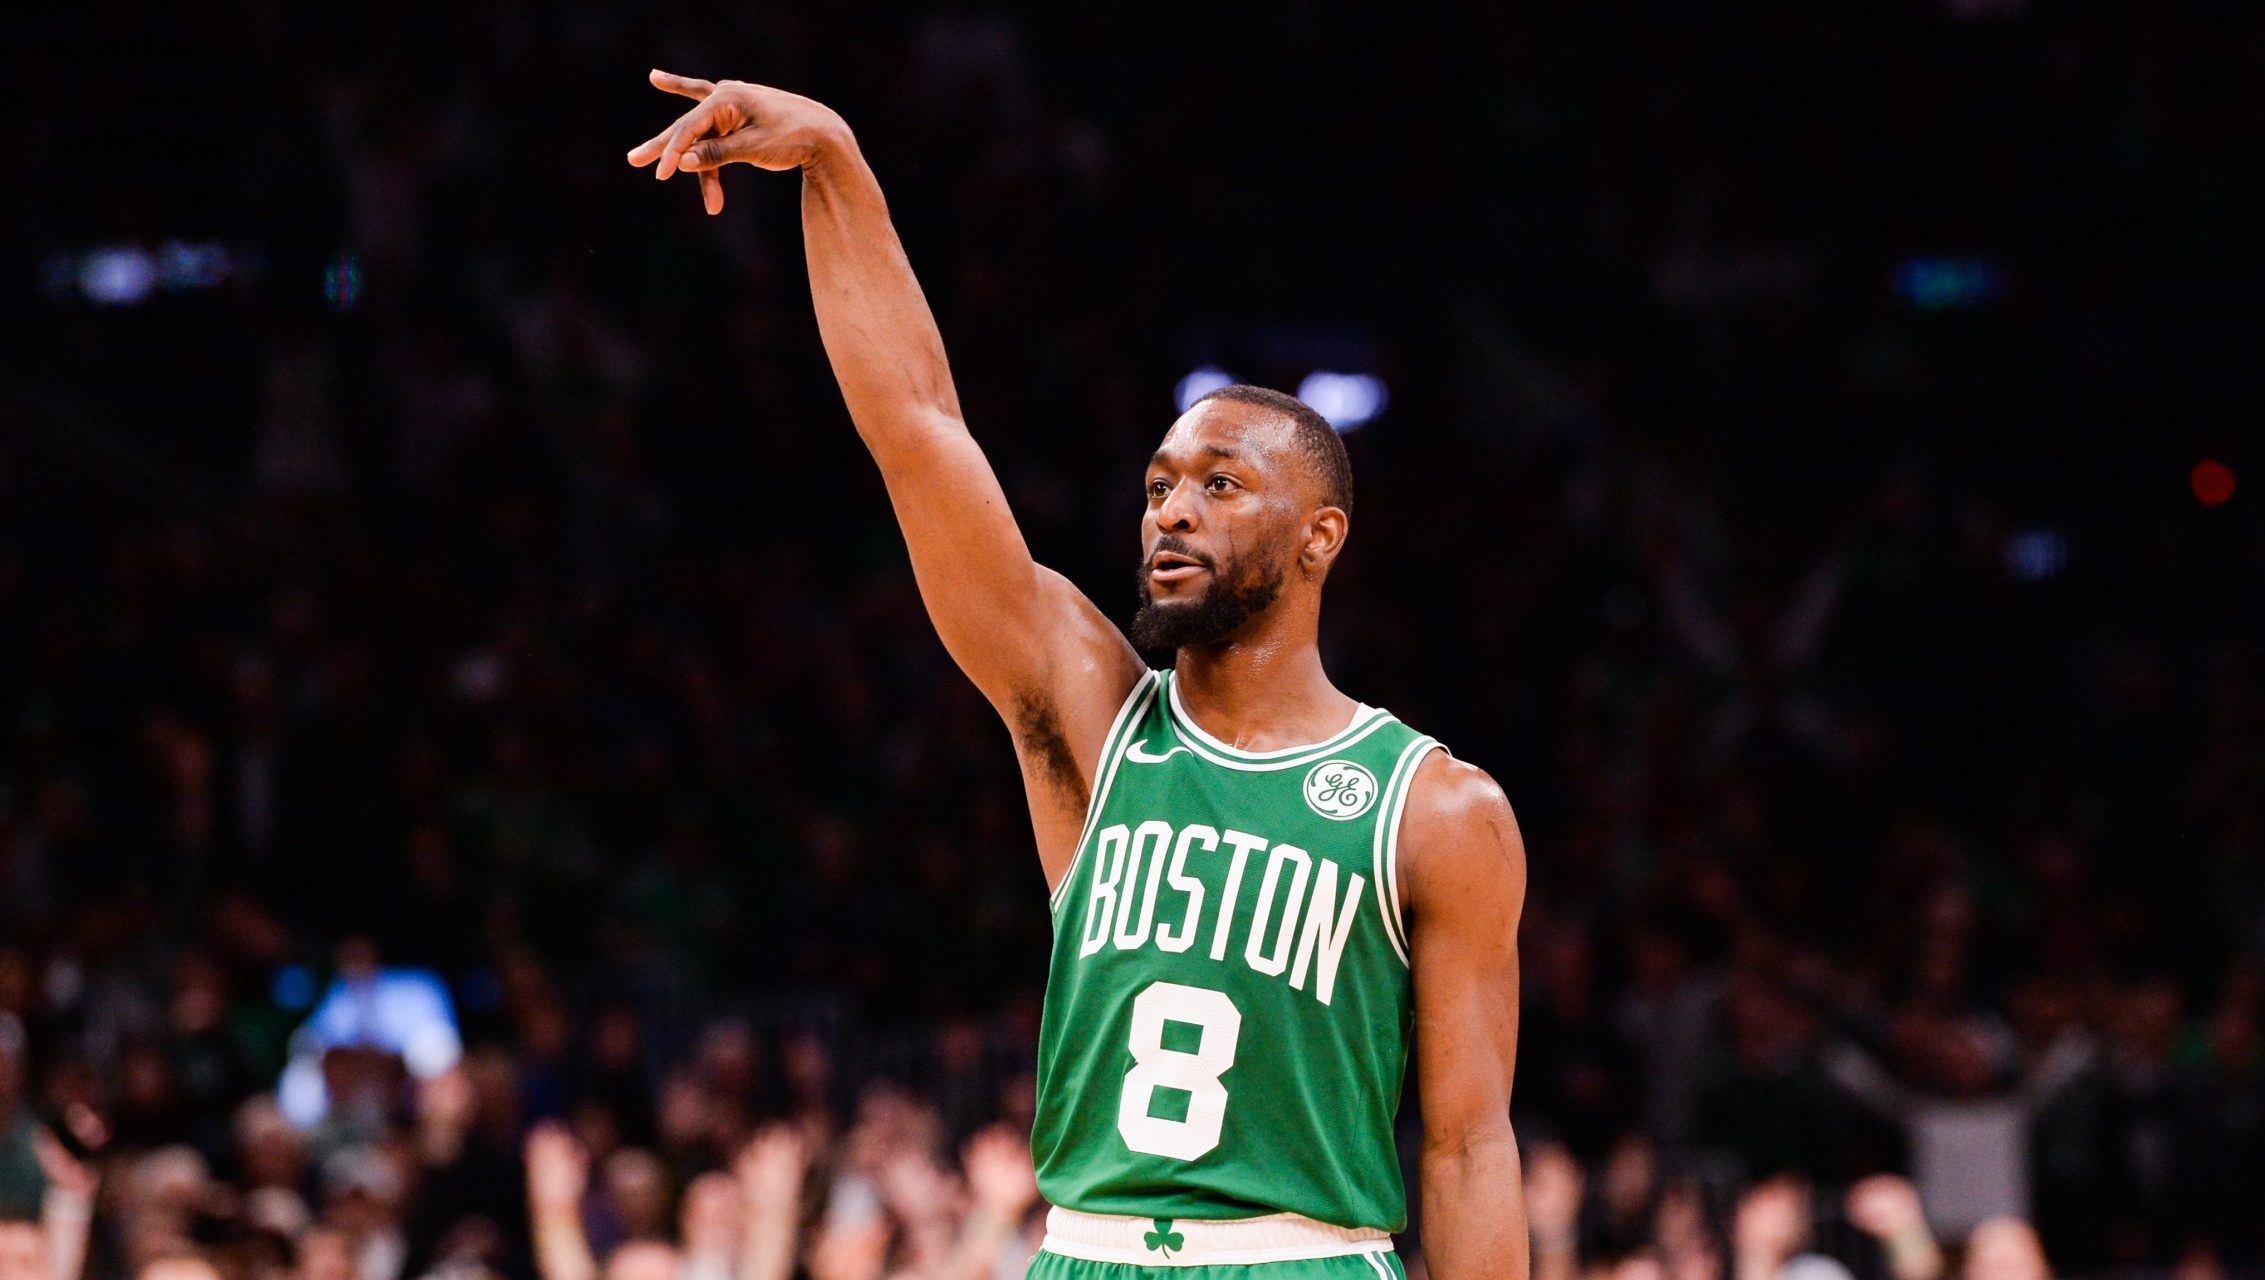 Knicks vs Celtics Live Stream How to Watch Online